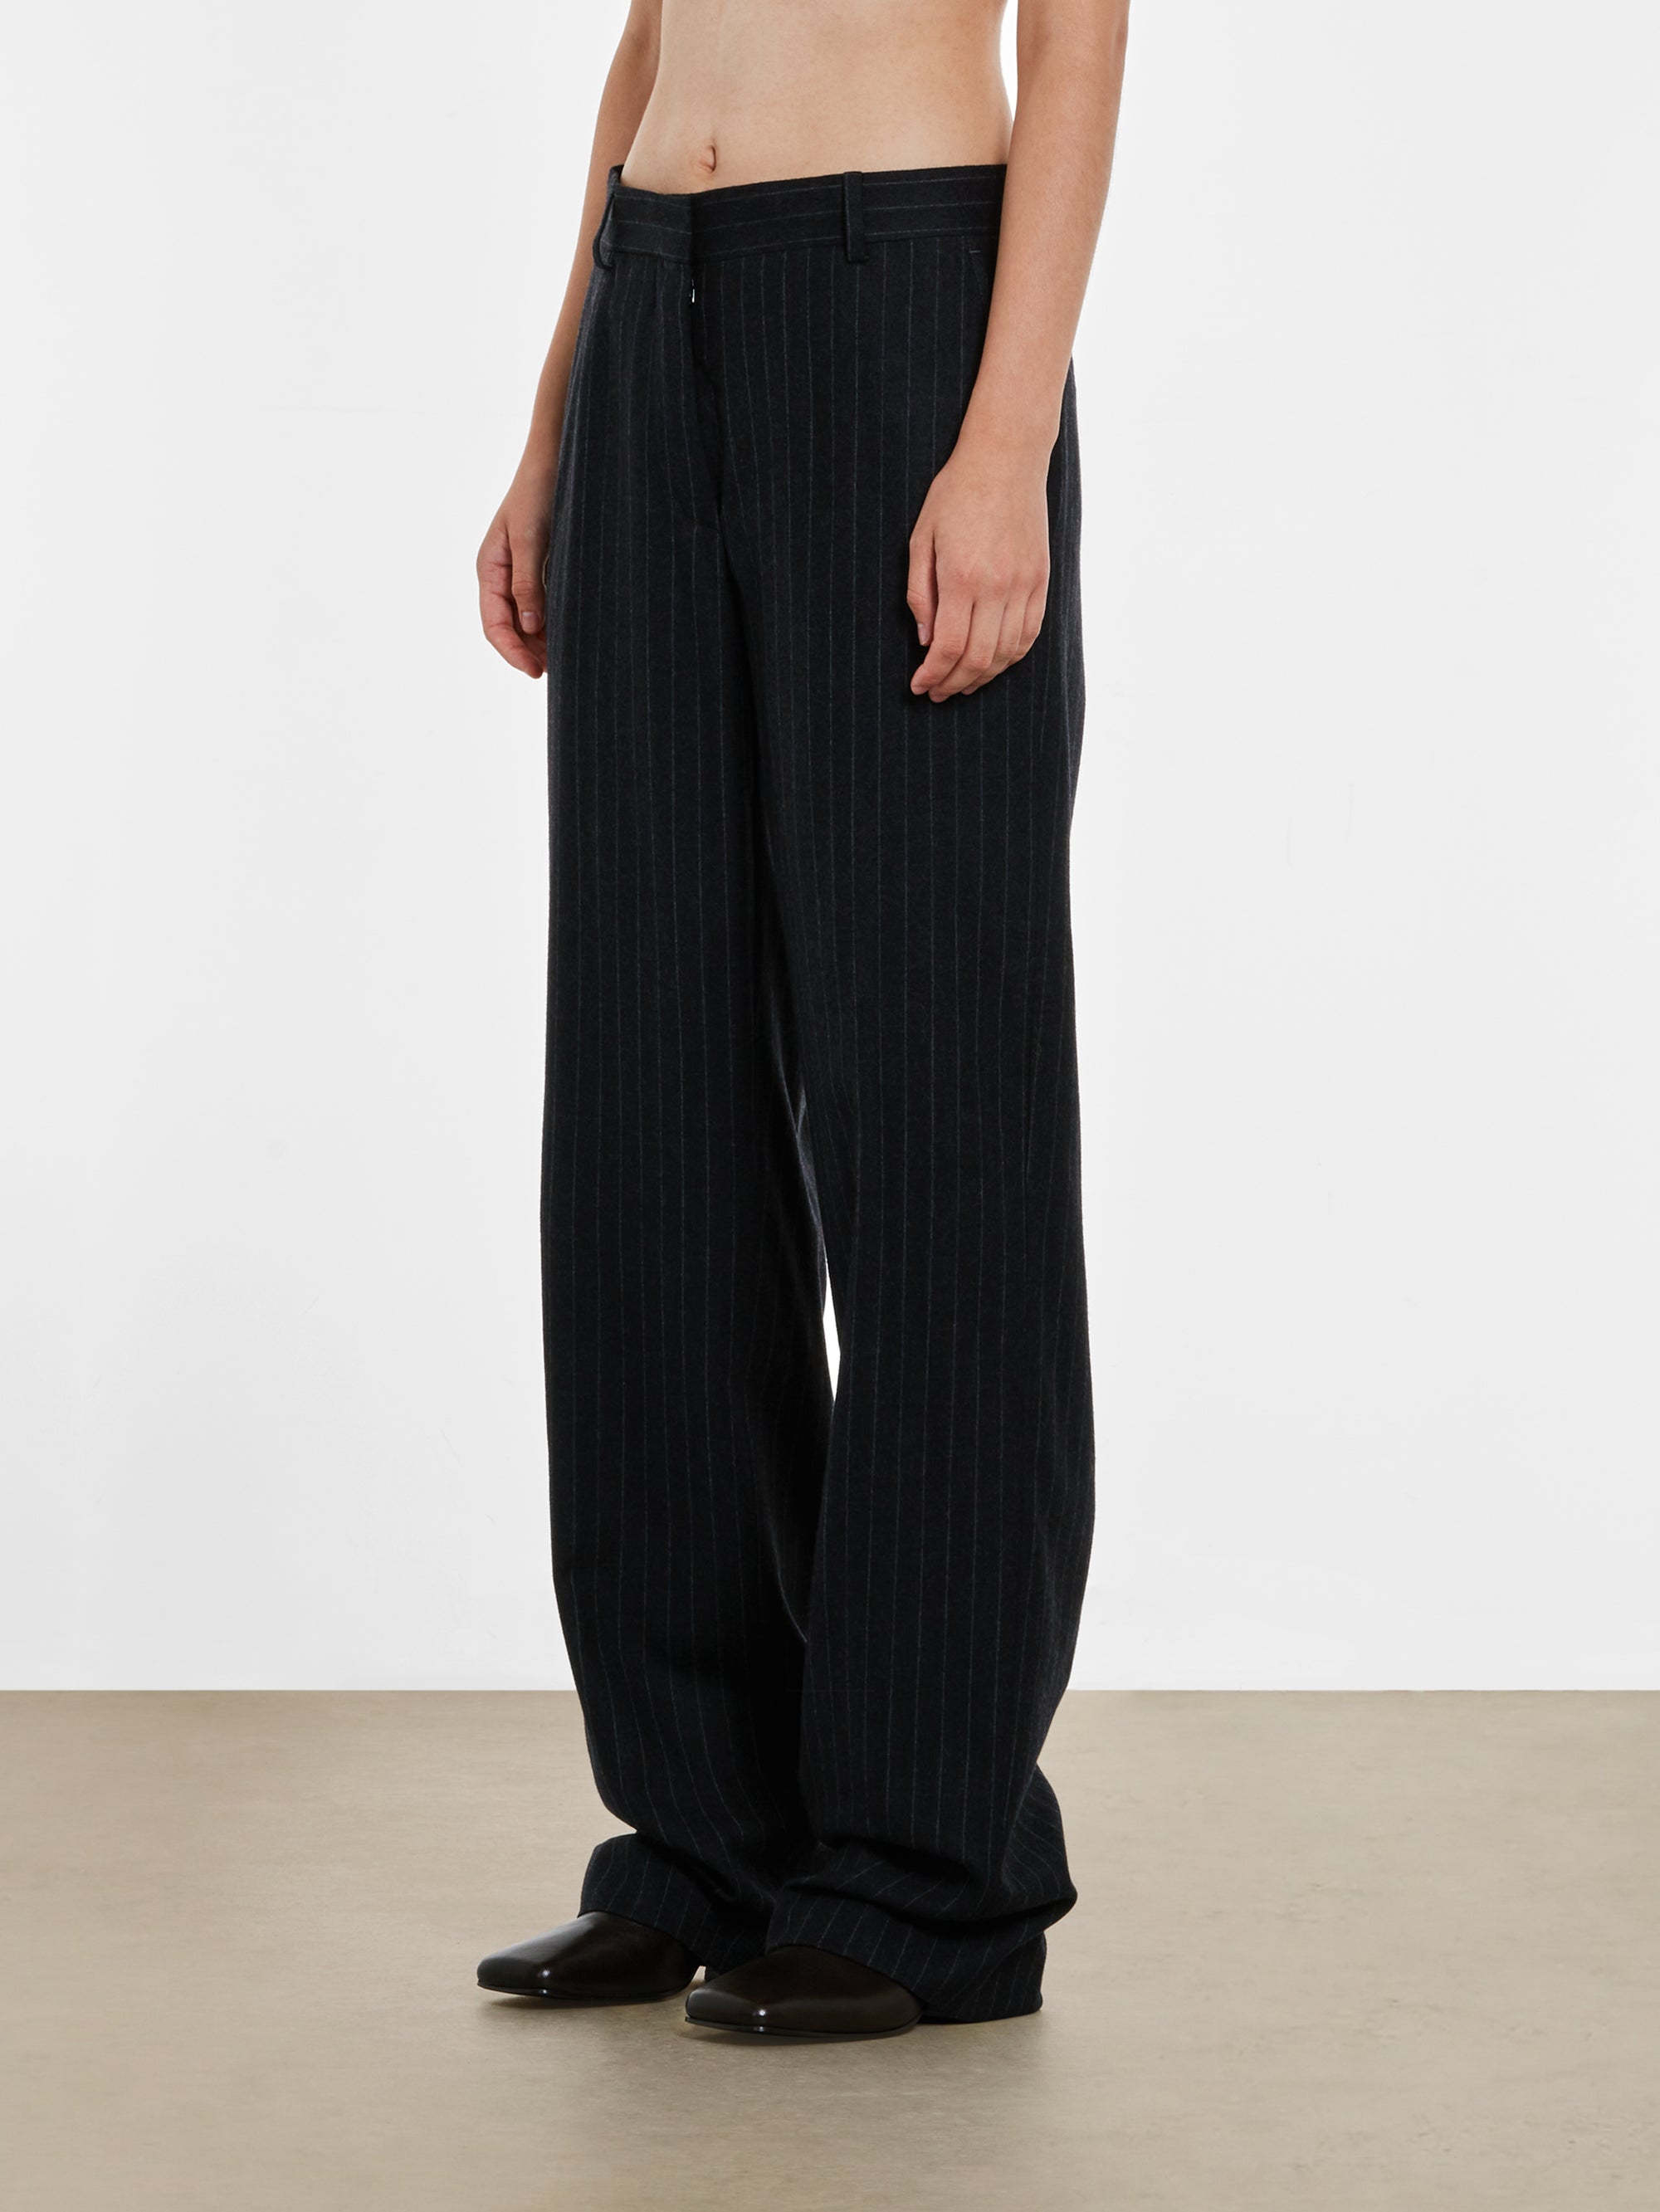 Dries Van Noten - Women’s Tailored Pant - (Anthracite) view 3